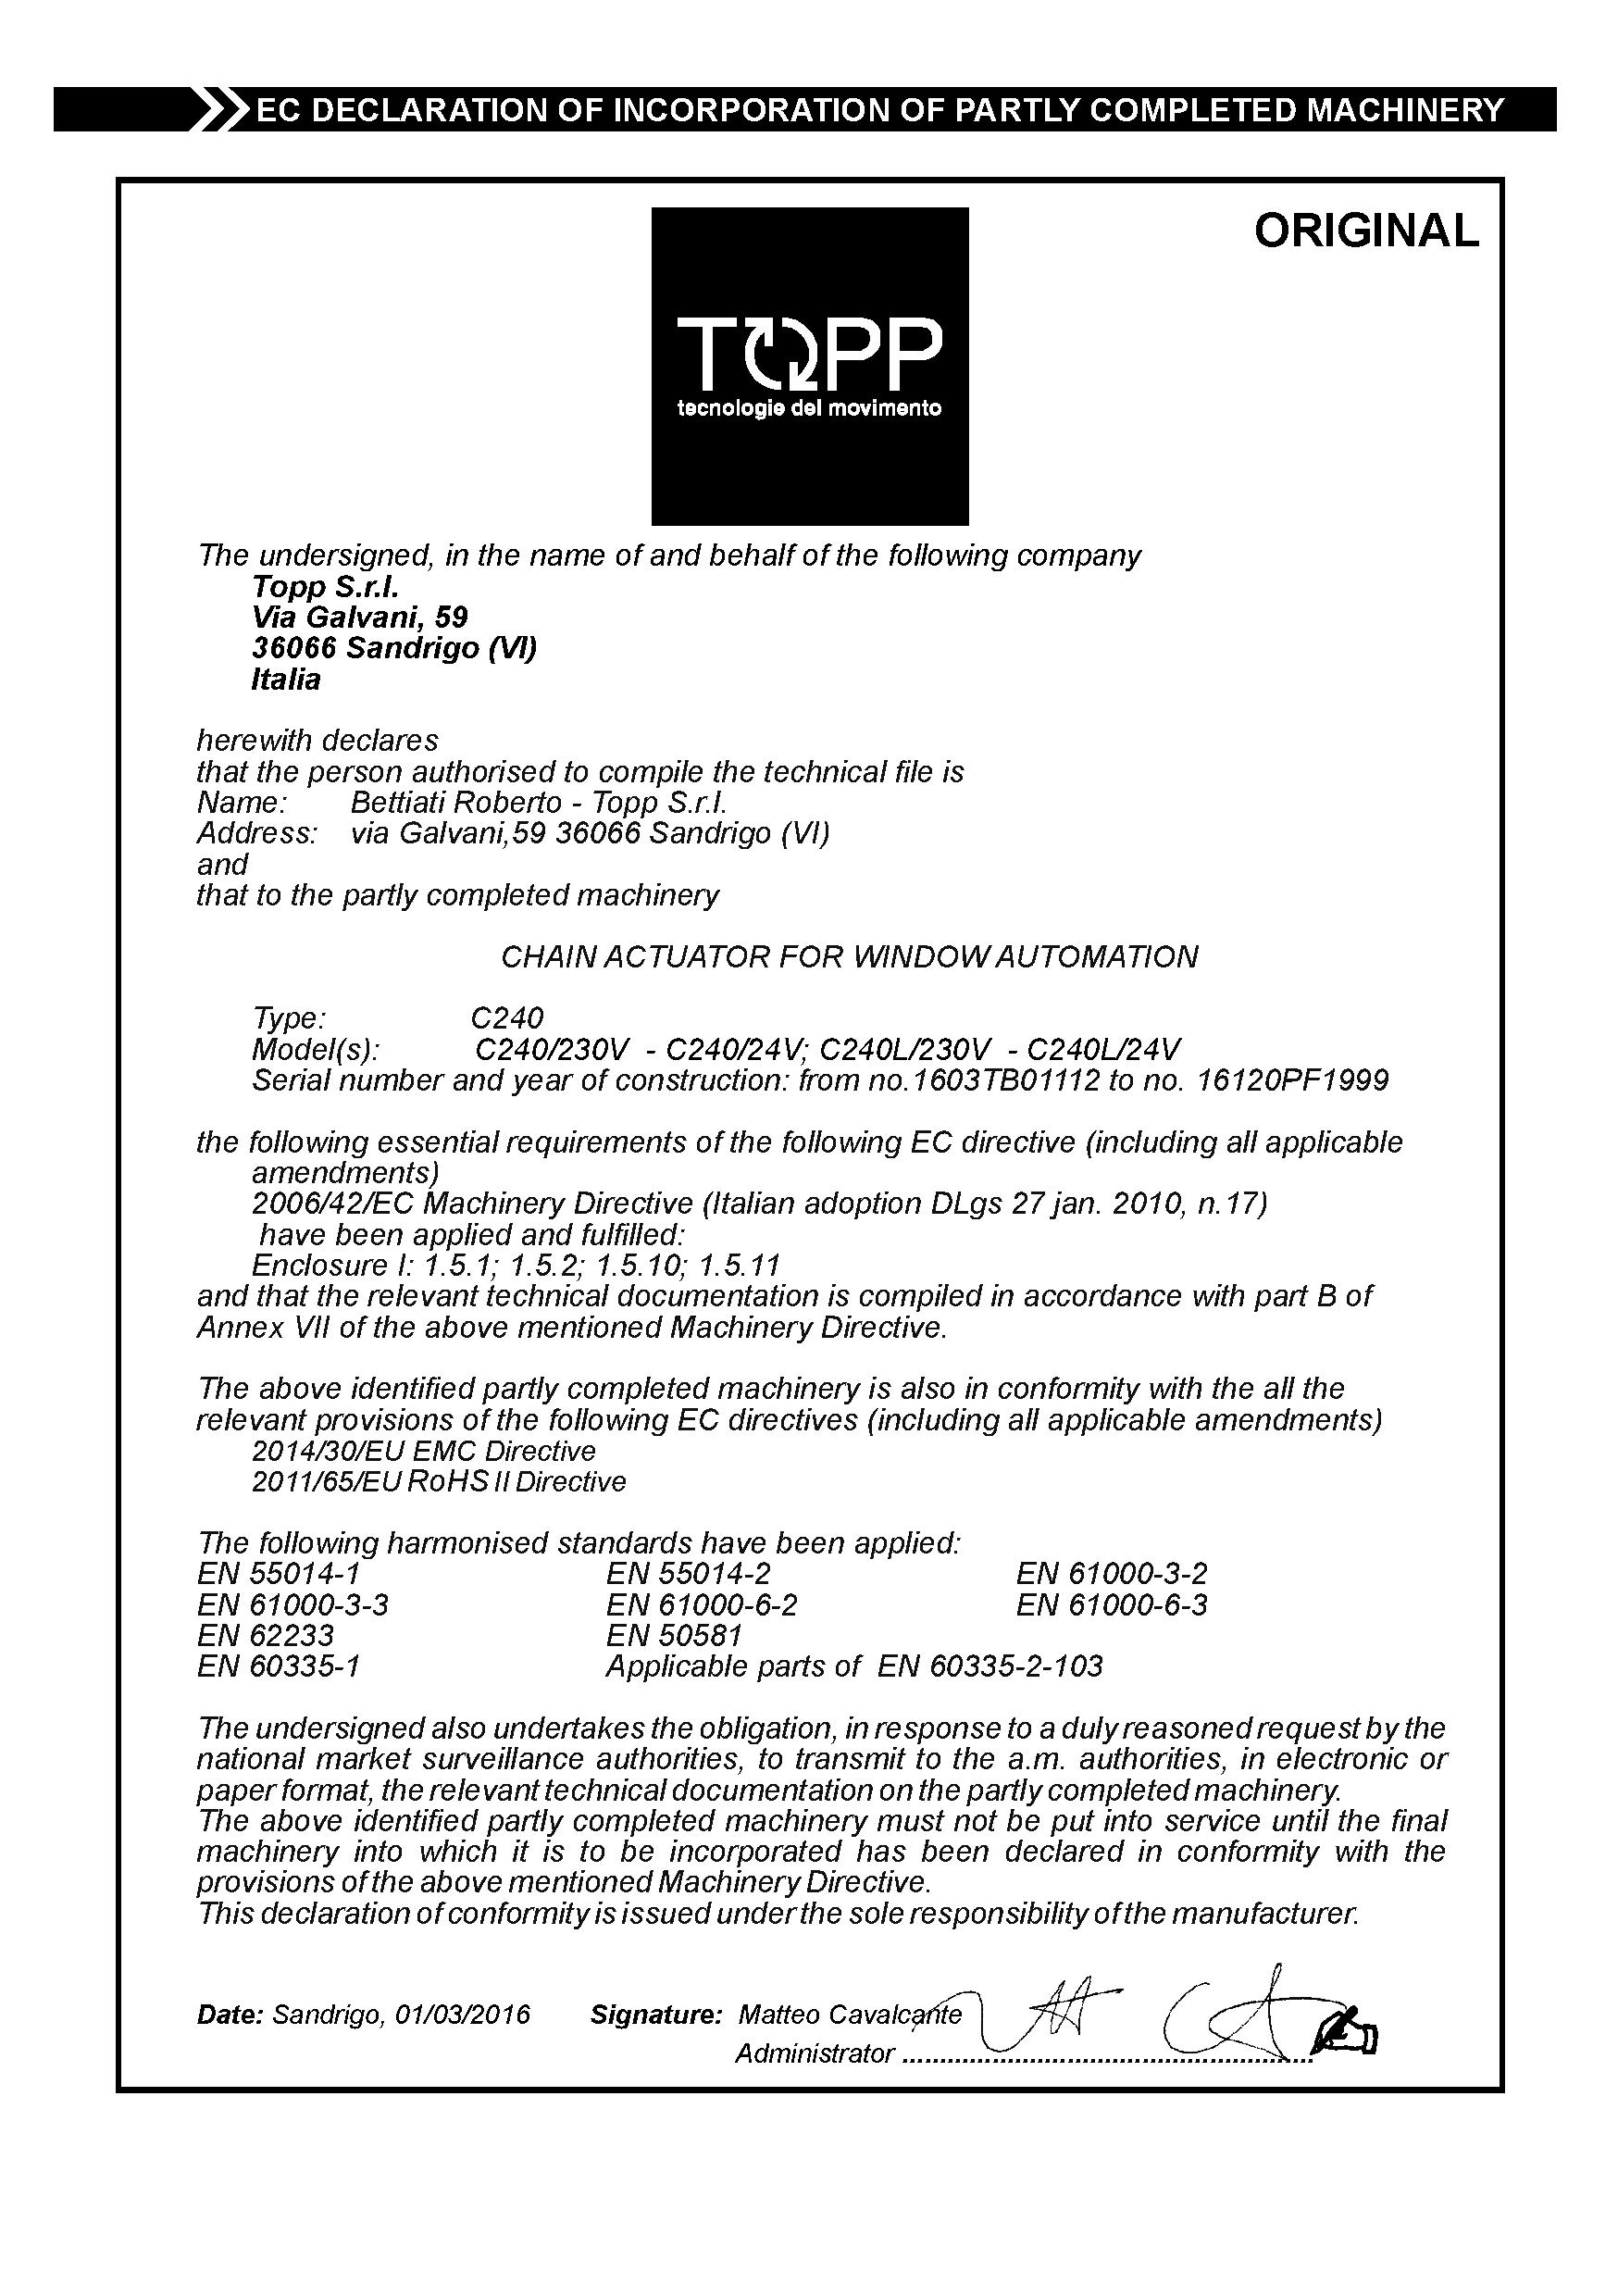 TOPP chain actuator C240 certifications